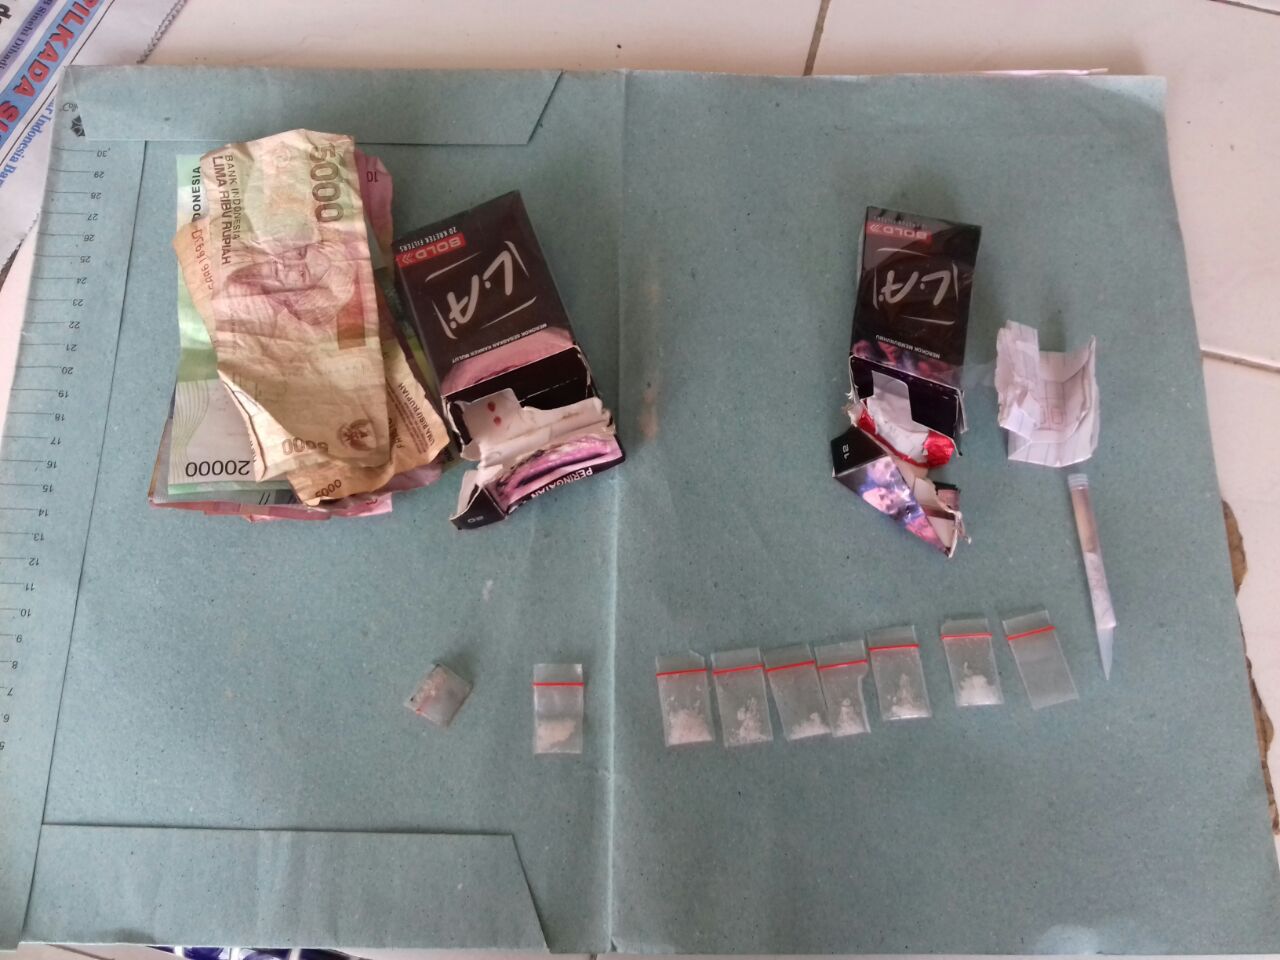 Foto : Barang Bukti Jenis Sabu dan dua bungkus rokok serta uang tunai di sita dari tersangka Lumba Ginting.